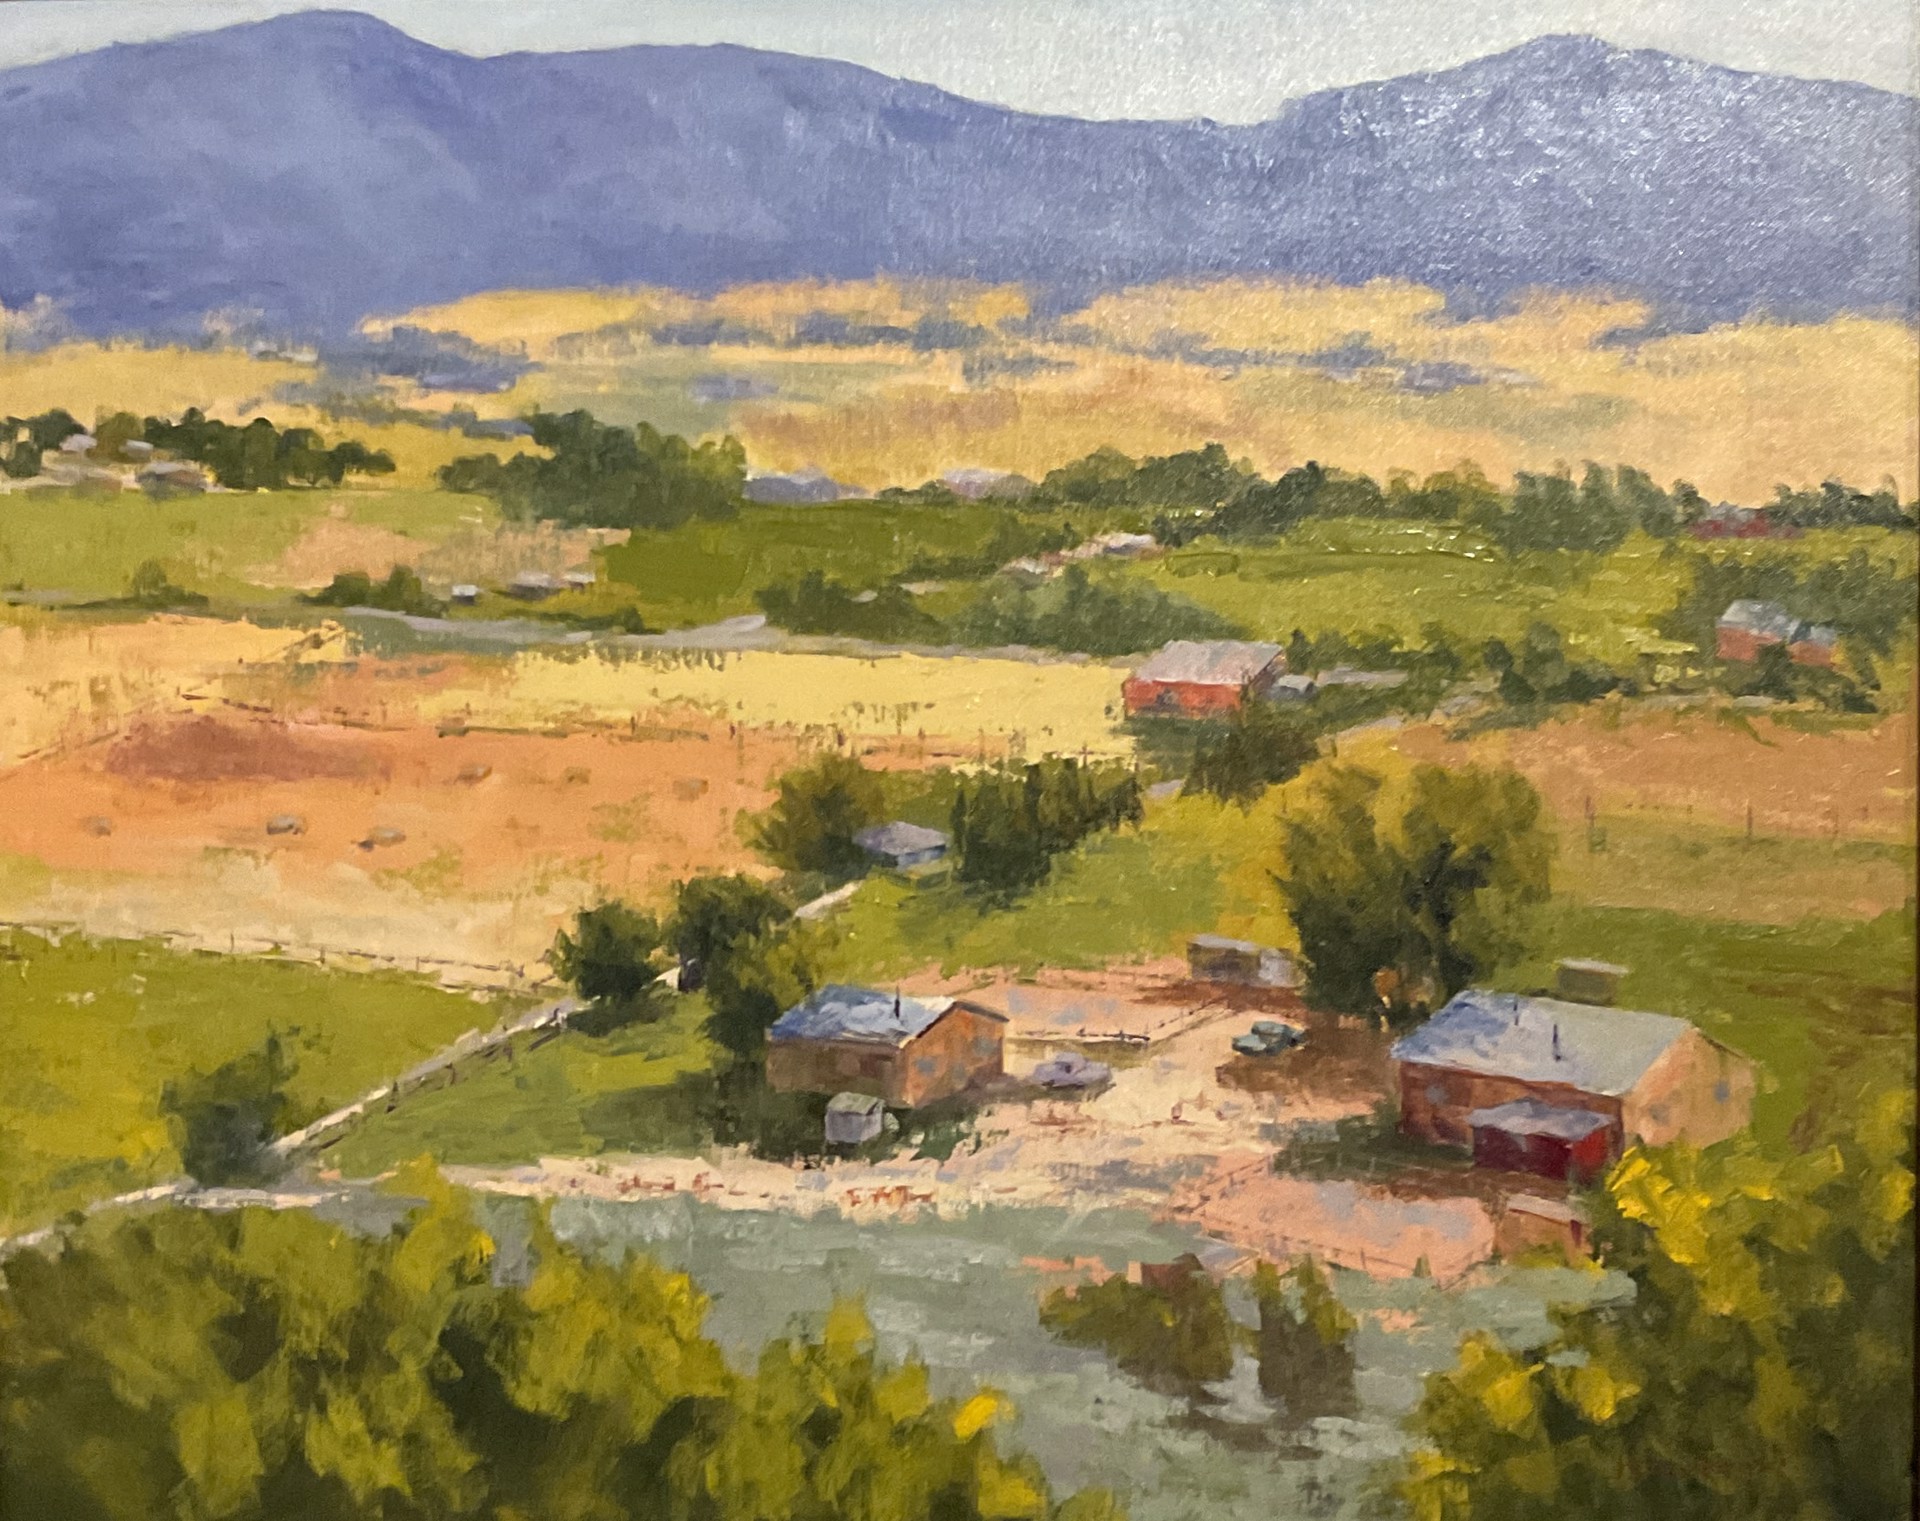 Arroyo Hondo Valley by Jon Vordermark